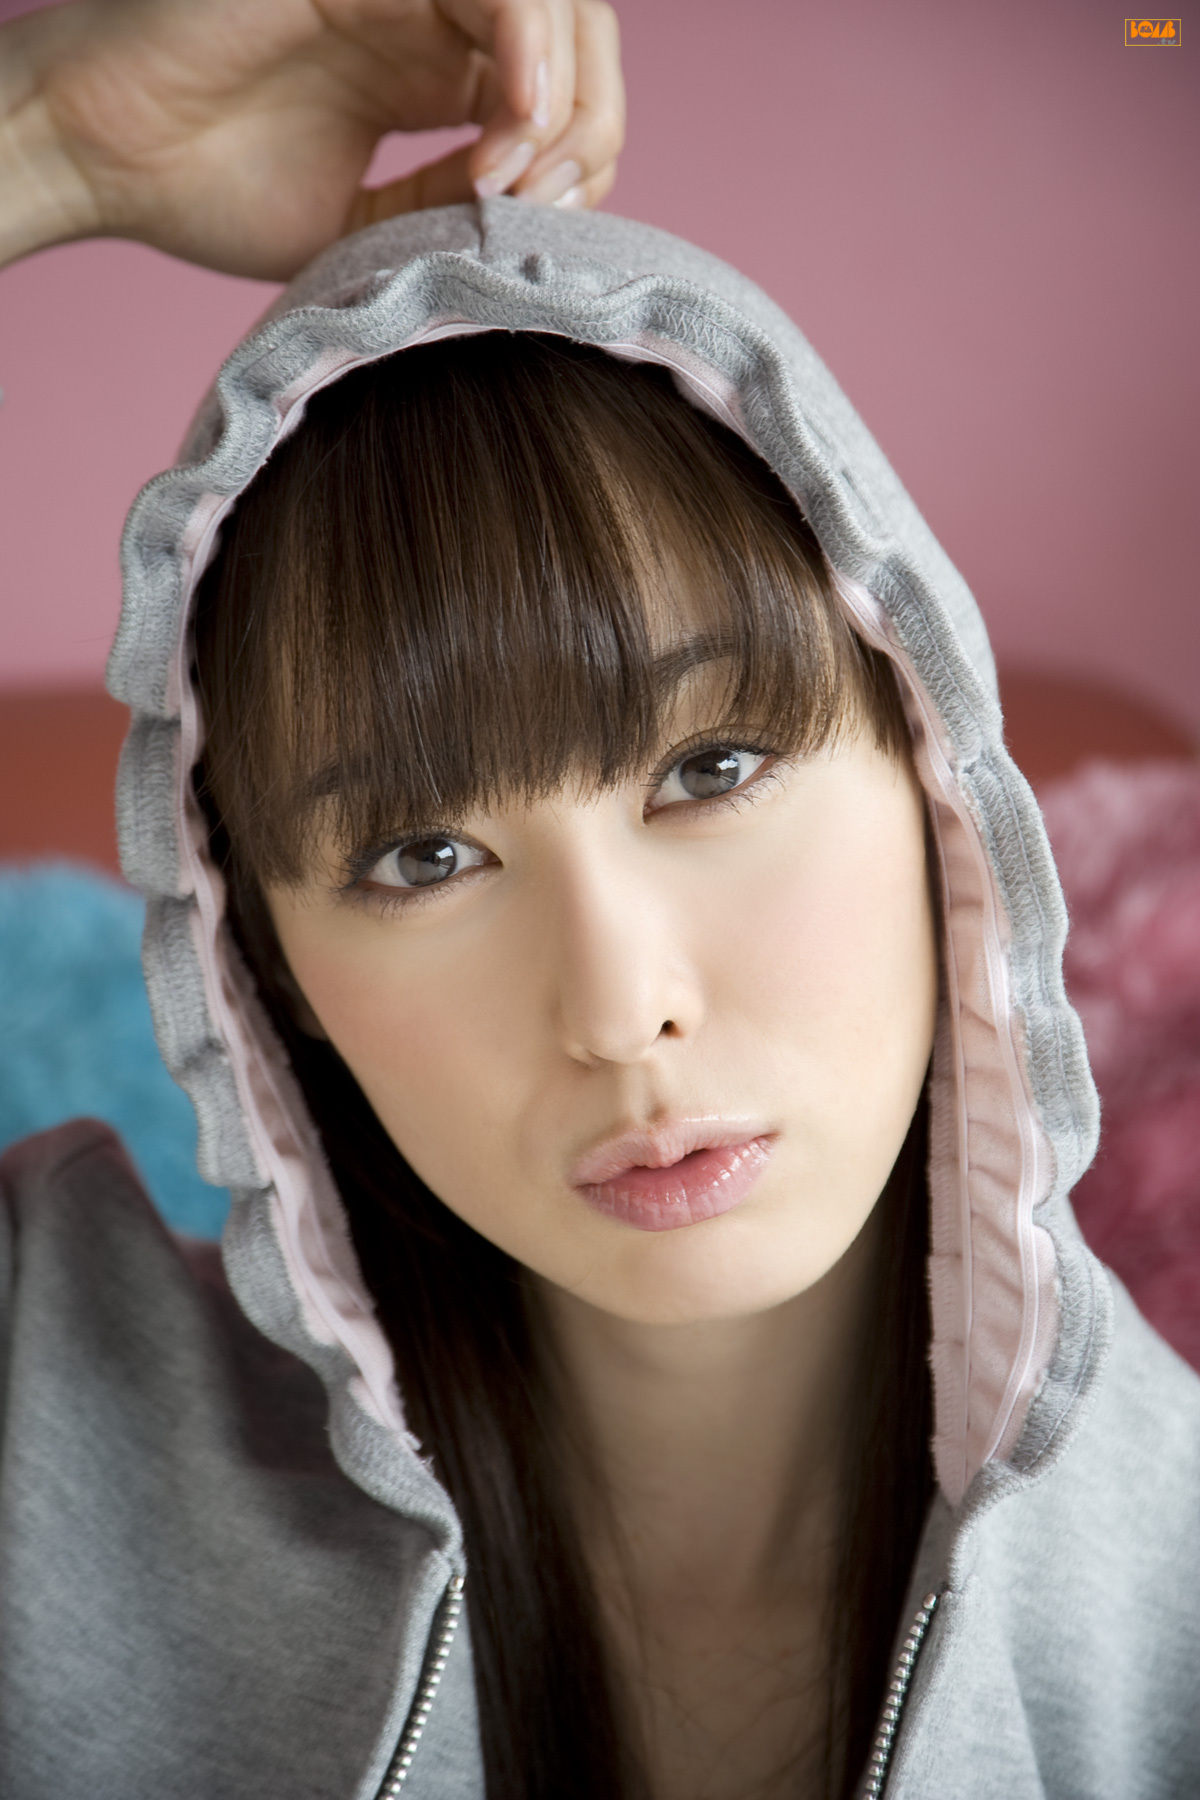 Rina Akiyama, a Japanese Beauty Bomb.TV